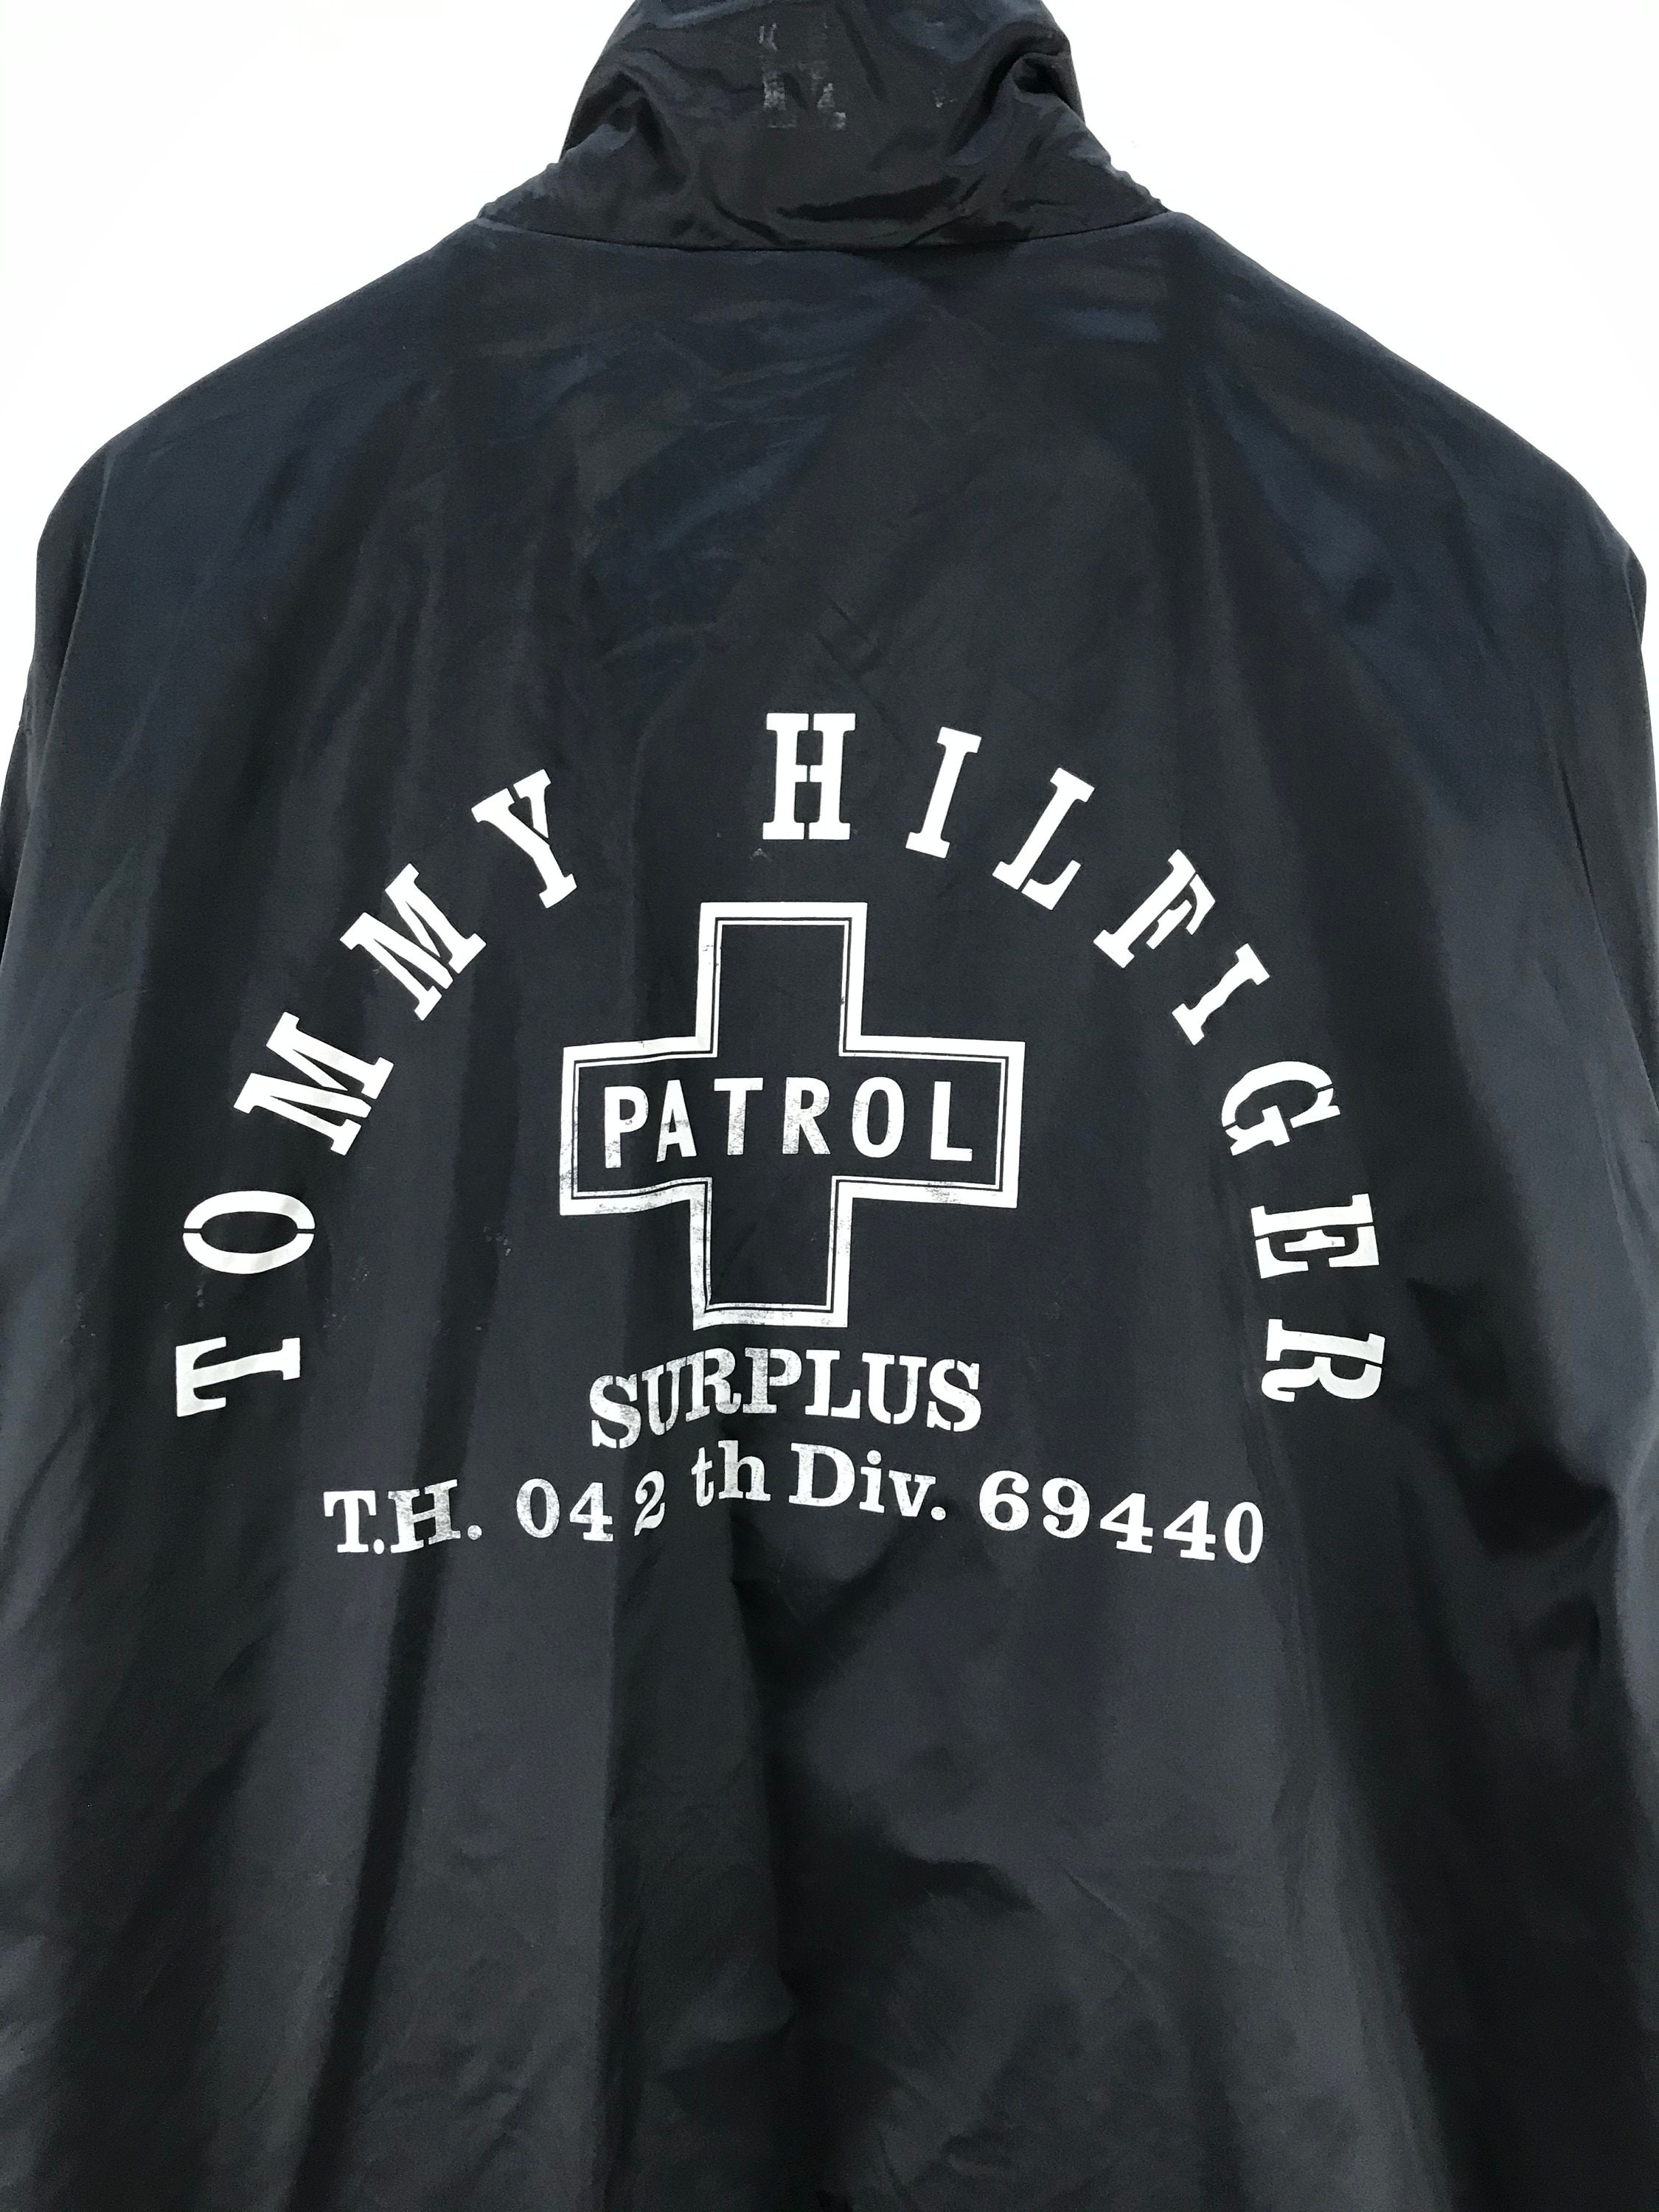 Vintage Tommy Hilfiger Patrol Surplus Jacket - Etsy